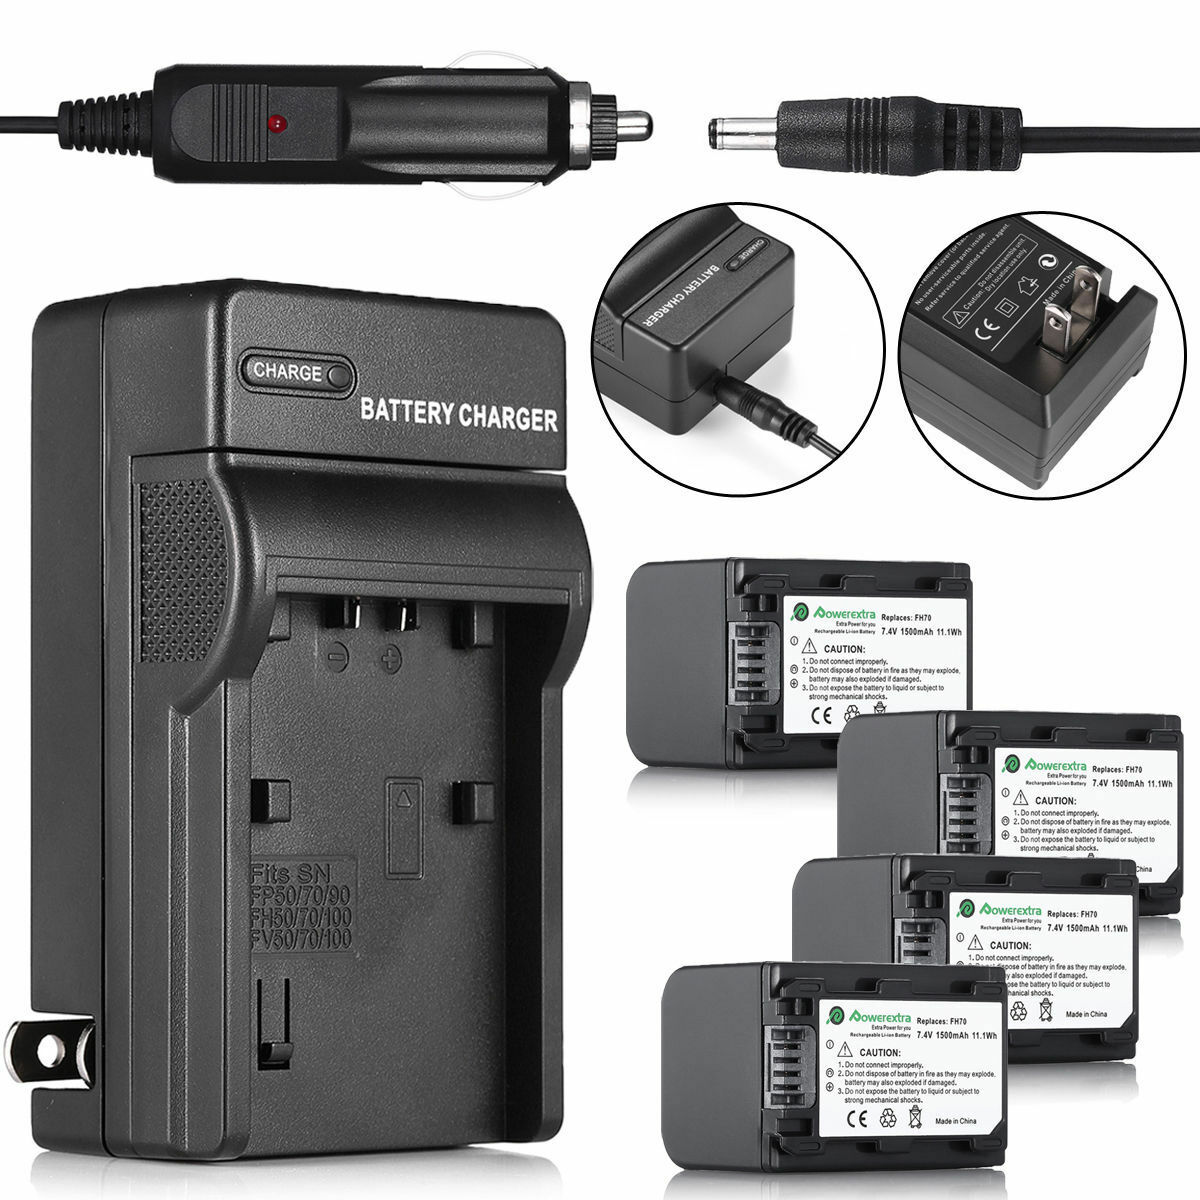 Battery+charger For Sony Handycam Dcr-sr42 Sr45 Sr47 Np-fh70 Hdr-sr11 Np-fh100